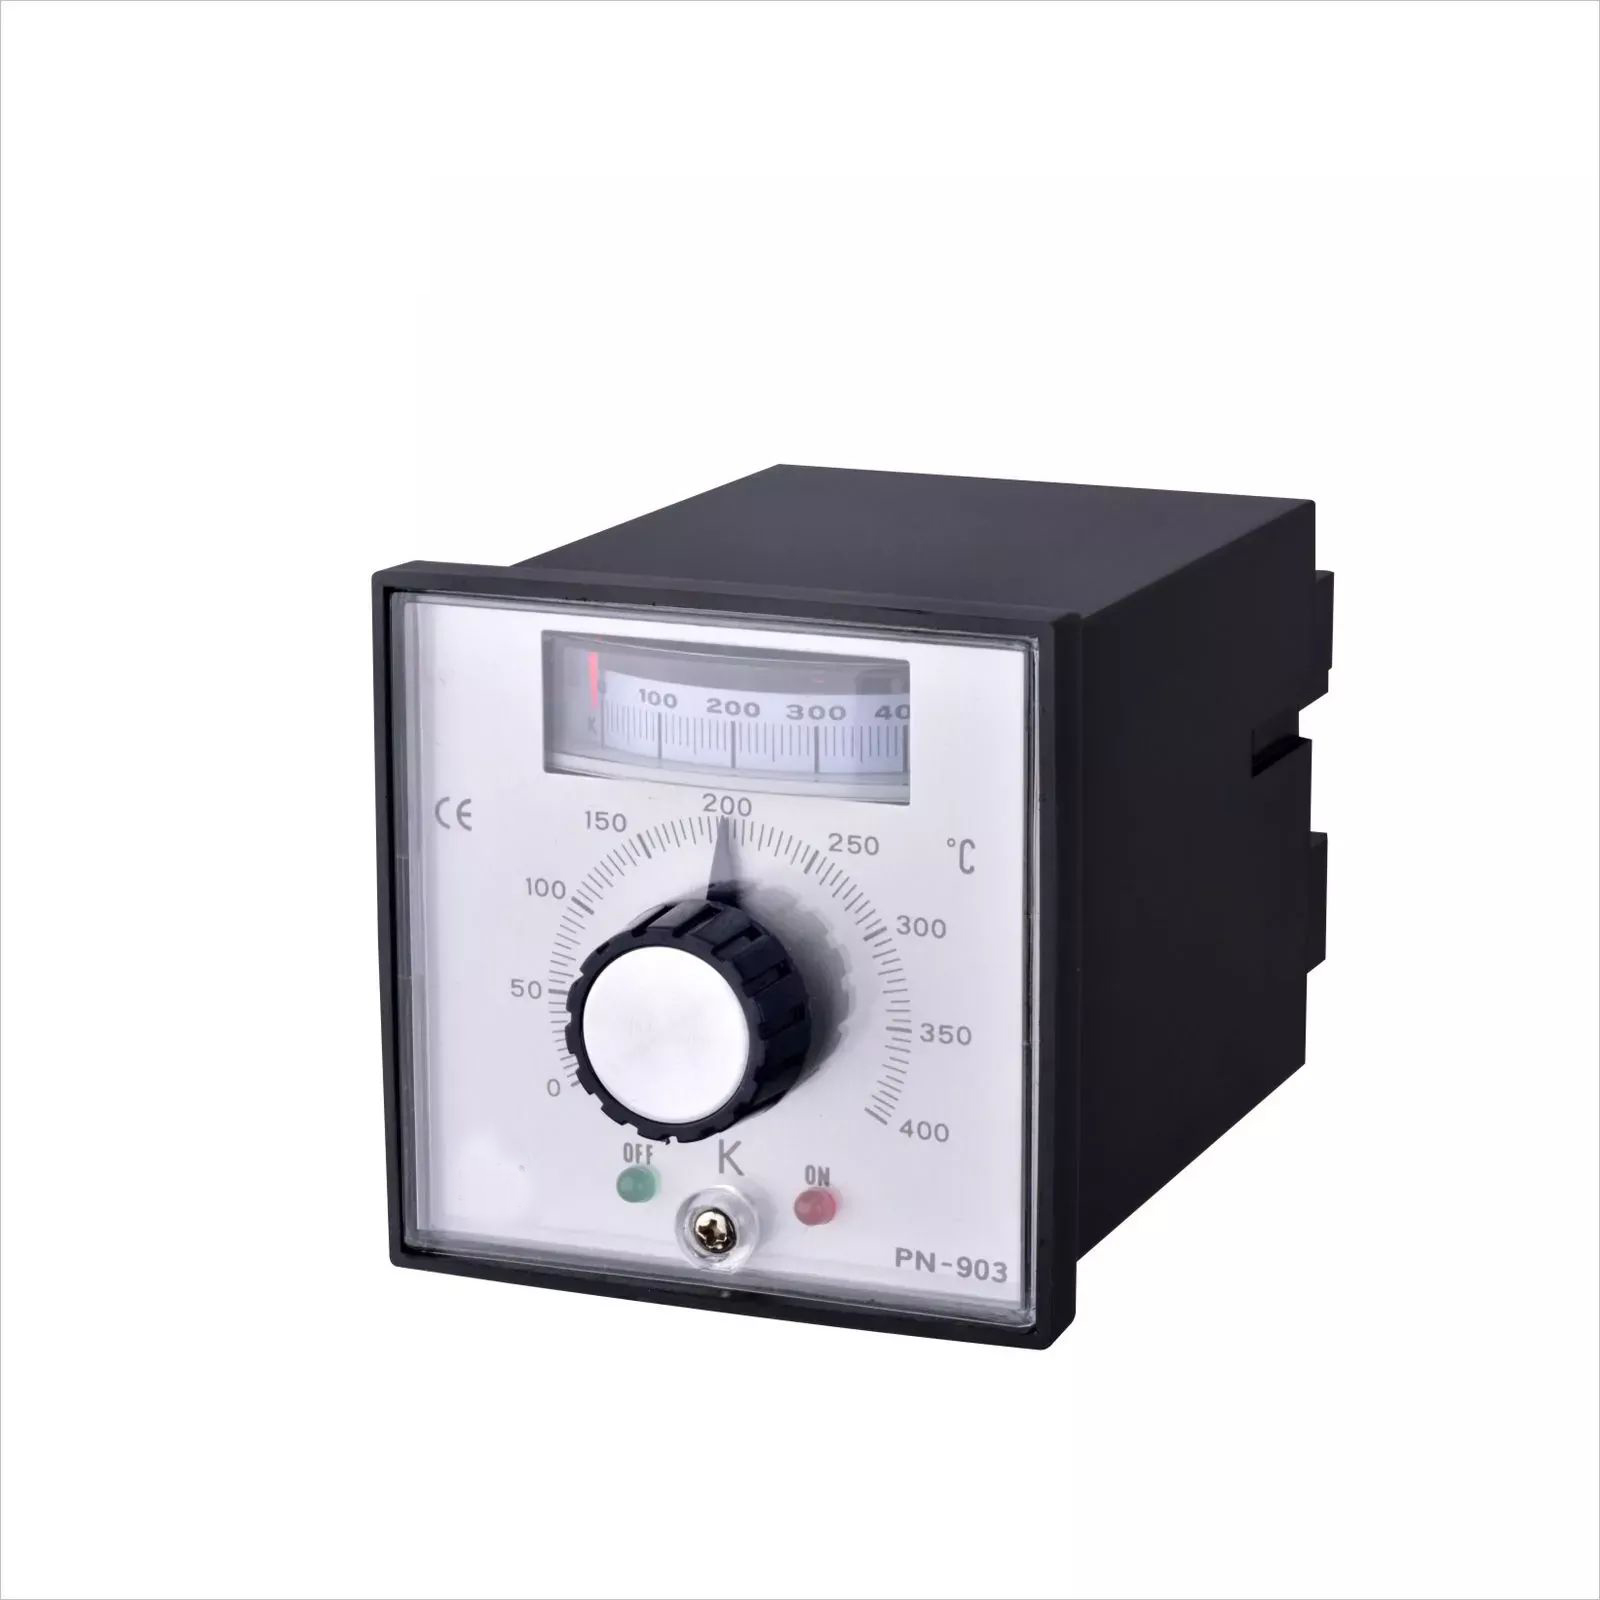 PN-903 PT100 K type thrmocouple microcomputer temperature controller